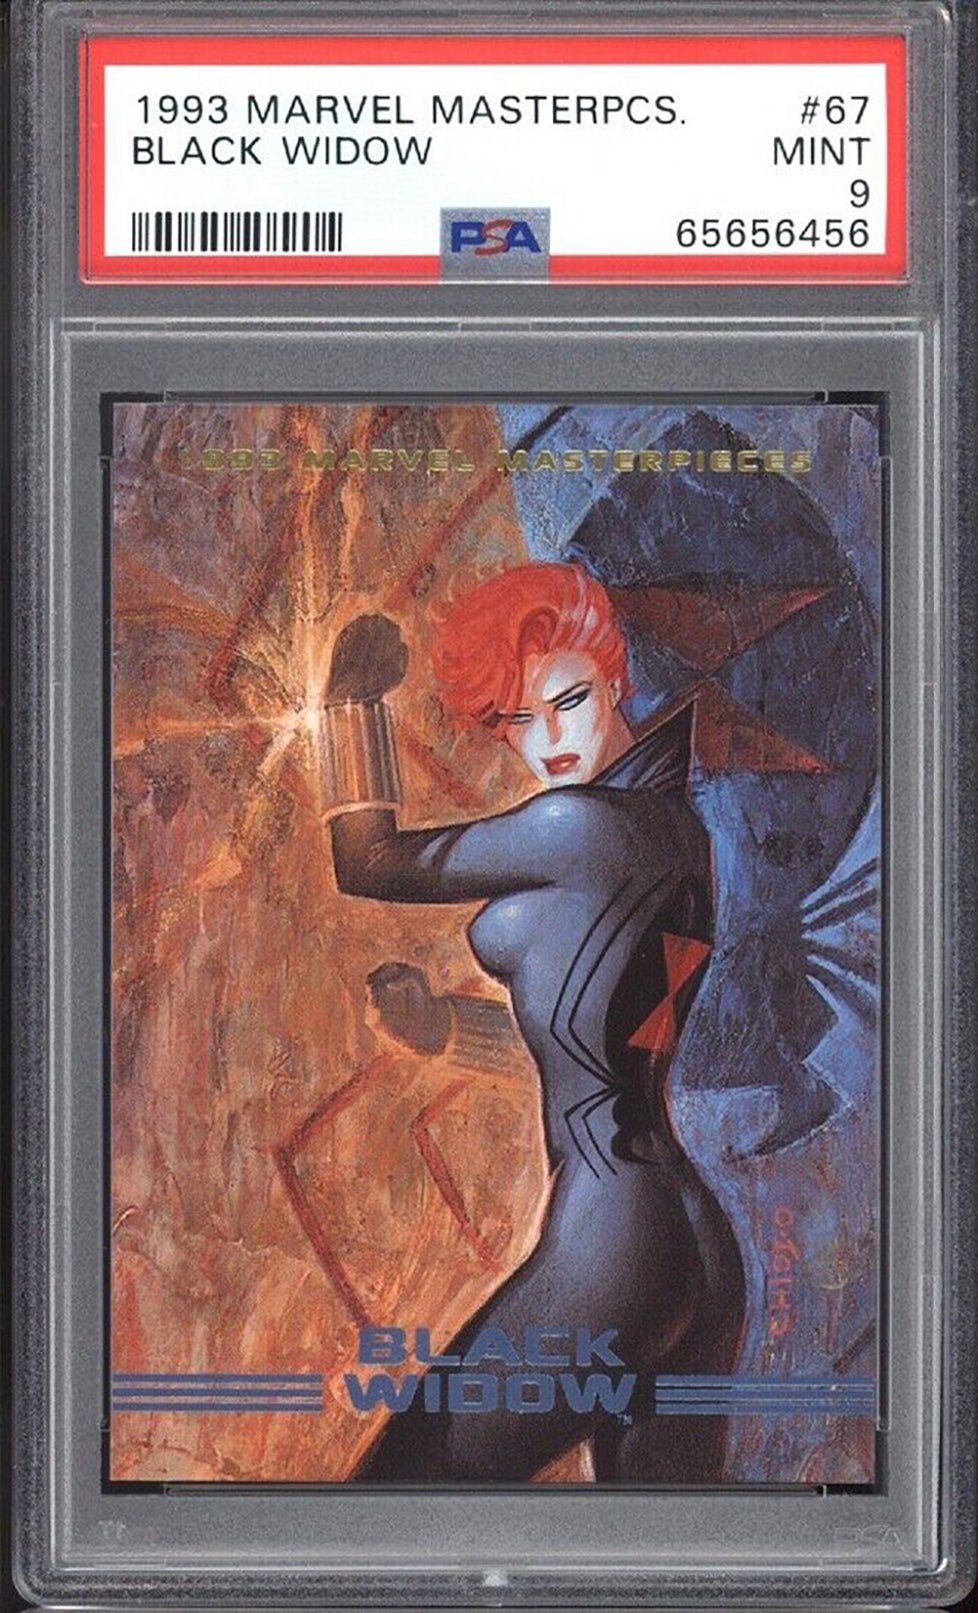 BLACK WIDOW PSA 9 1993 Marvel Masterpieces #67 C2 Marvel Base Graded Cards - Hobby Gems